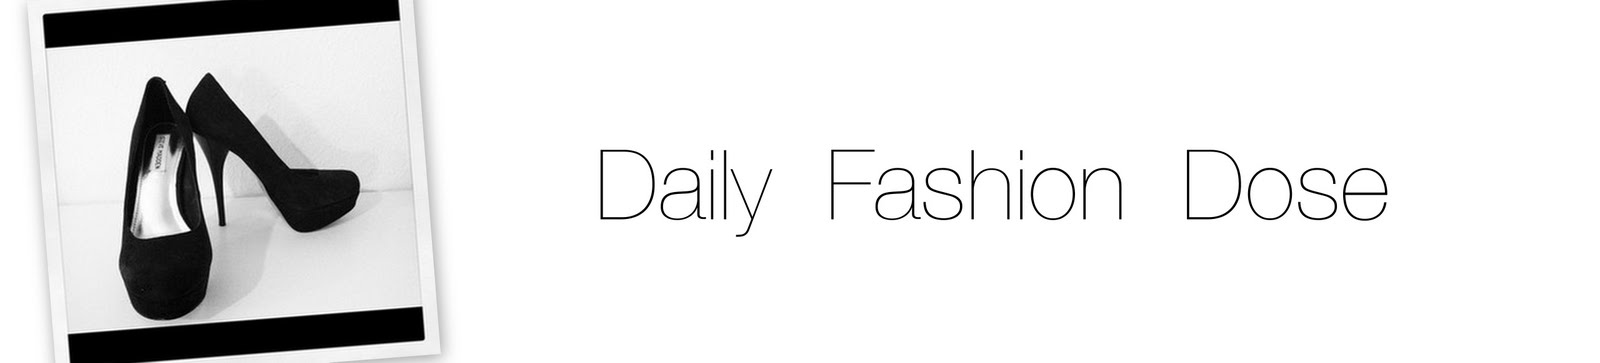 Daily fashion dose